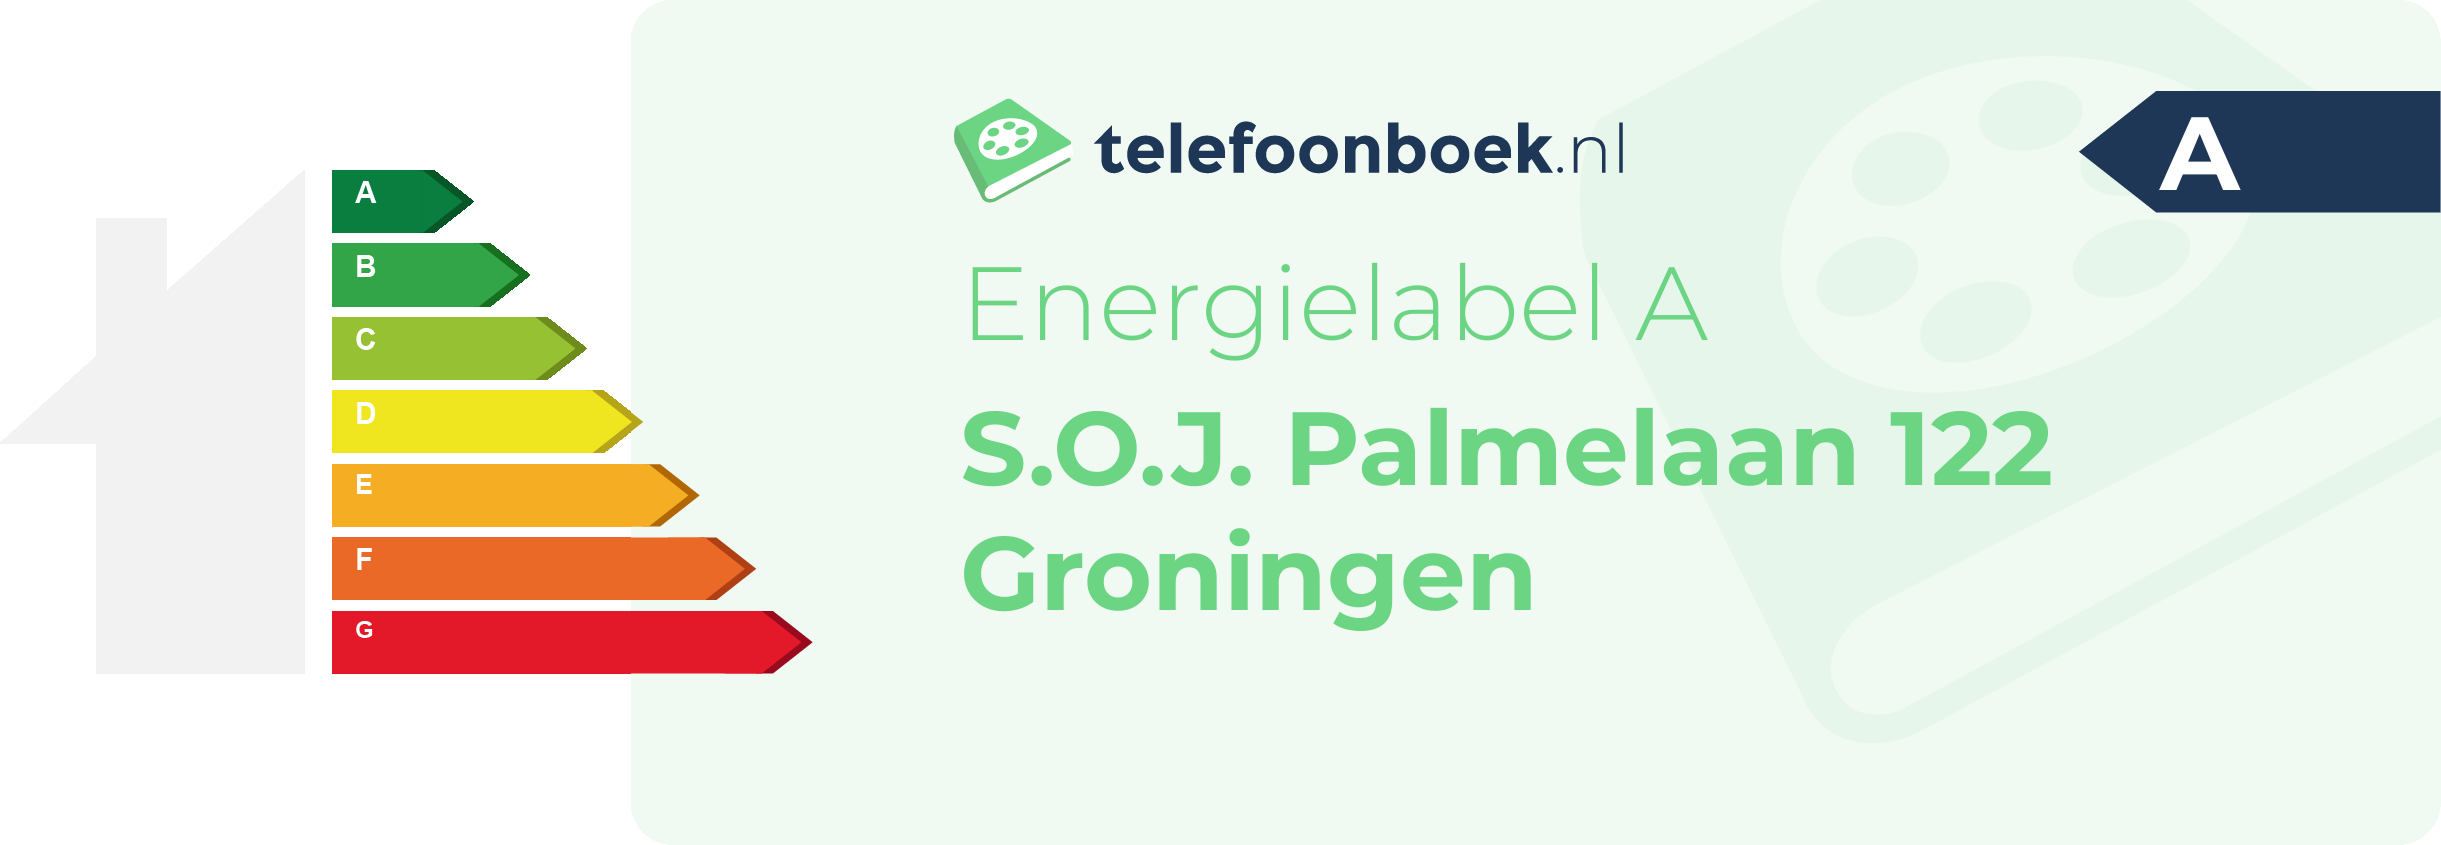 Energielabel S.O.J. Palmelaan 122 Groningen